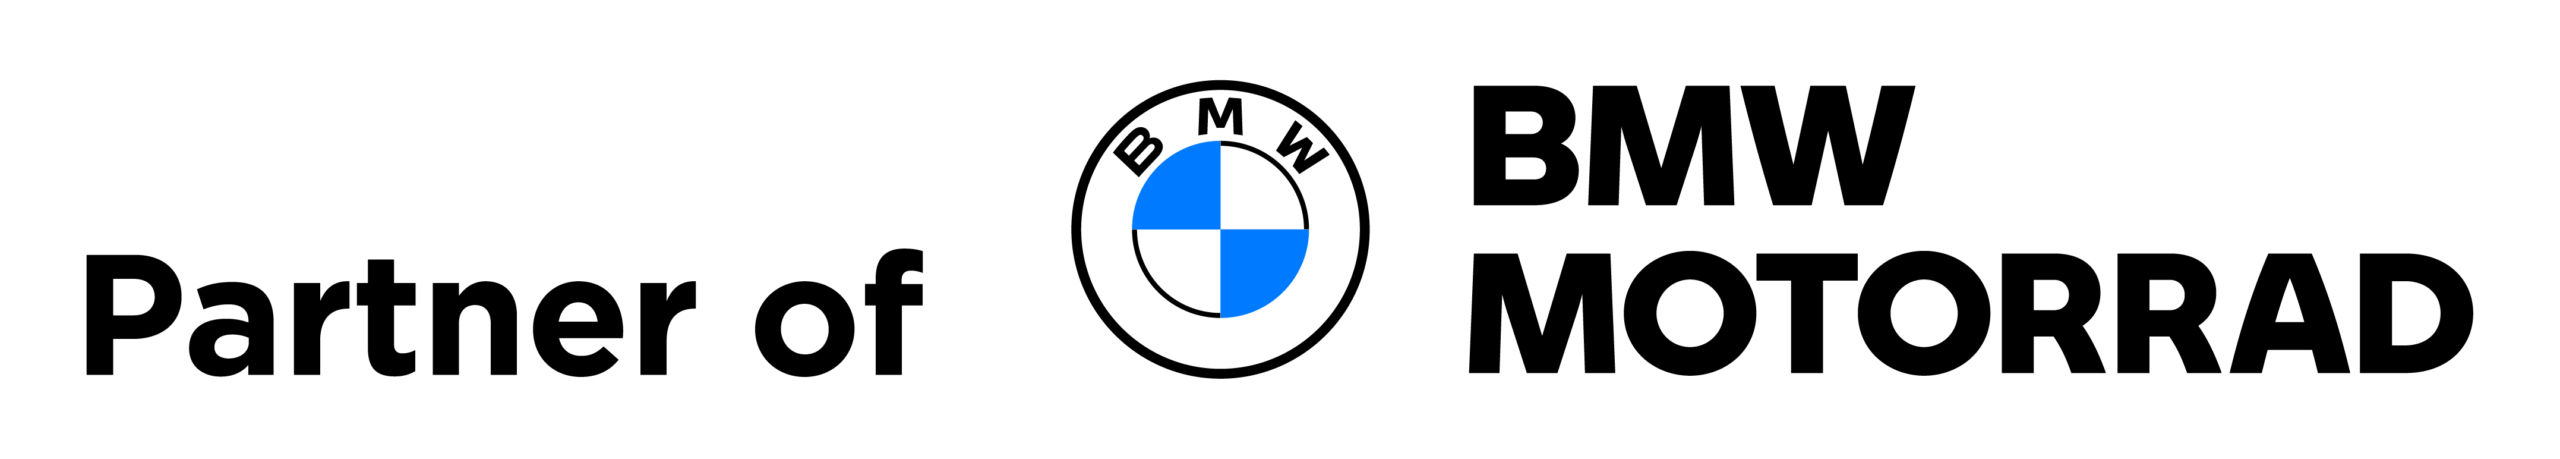 Partner of BMW